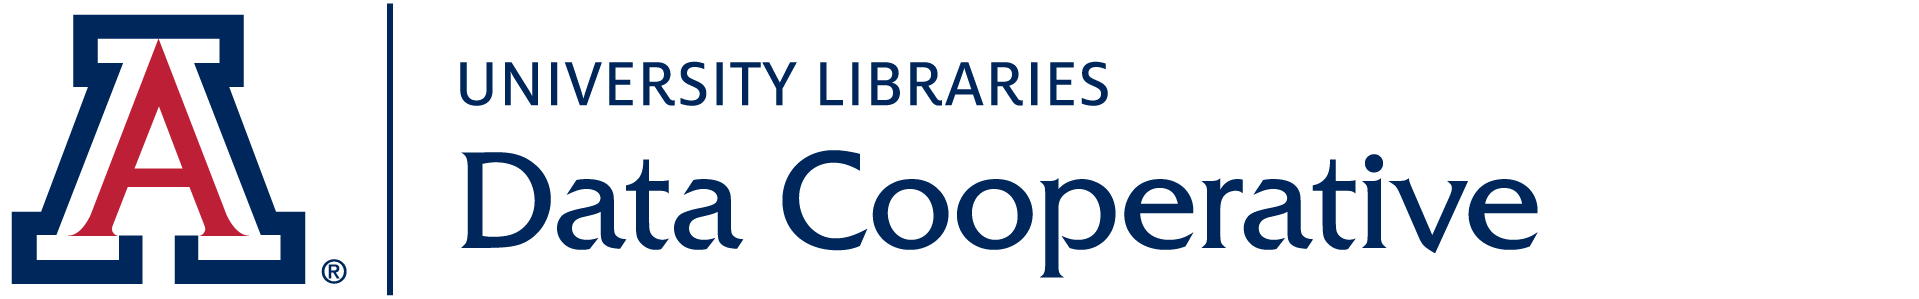 University of Arizona Libraries | Data Cooperative